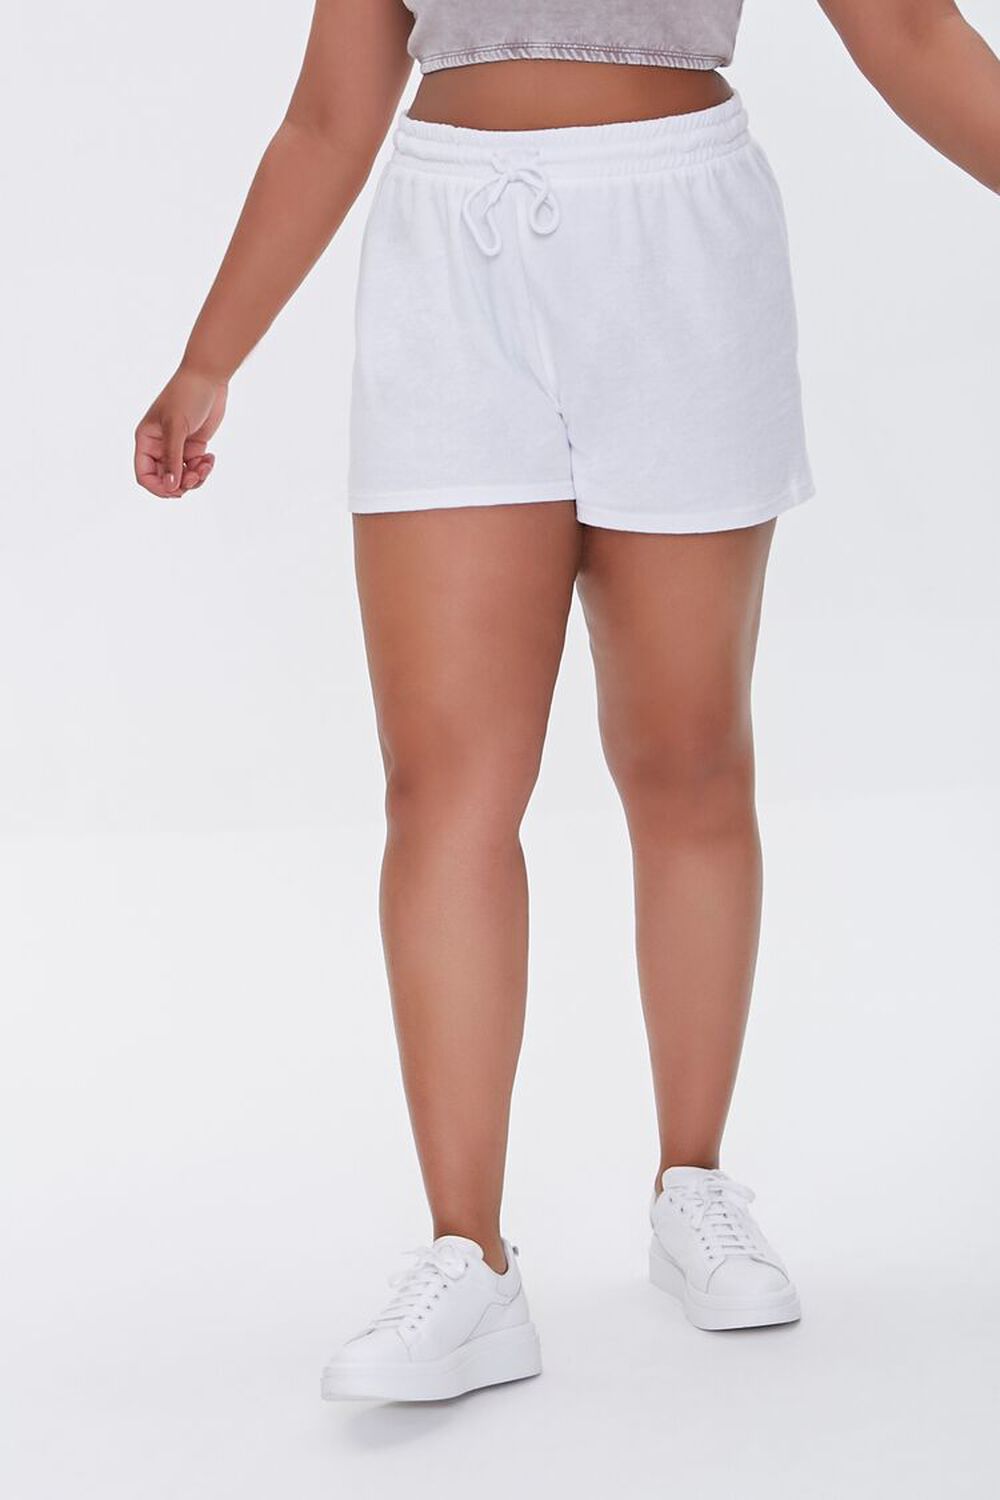 WHITE Plus Size French Terry Drawstring Shorts, image 2